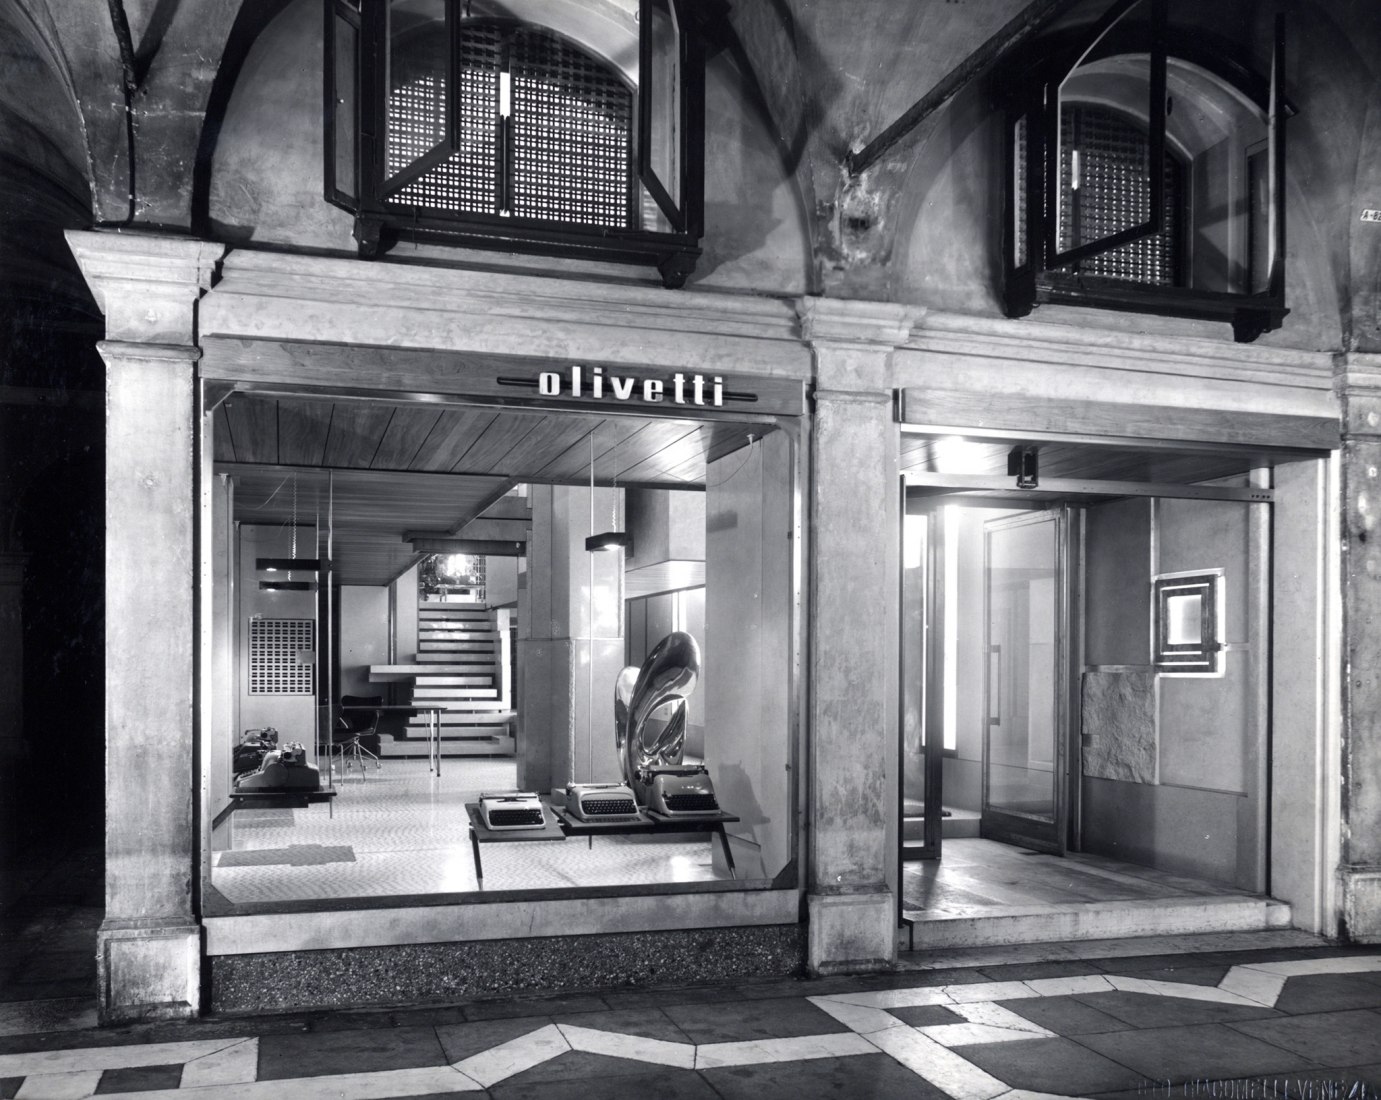 Carlo Scarpa. Layout of the Olivetti store in Piazza San Marco Venice 1957-58. (Carlo Scarpa Archive, MAXXI Architecture Collection).